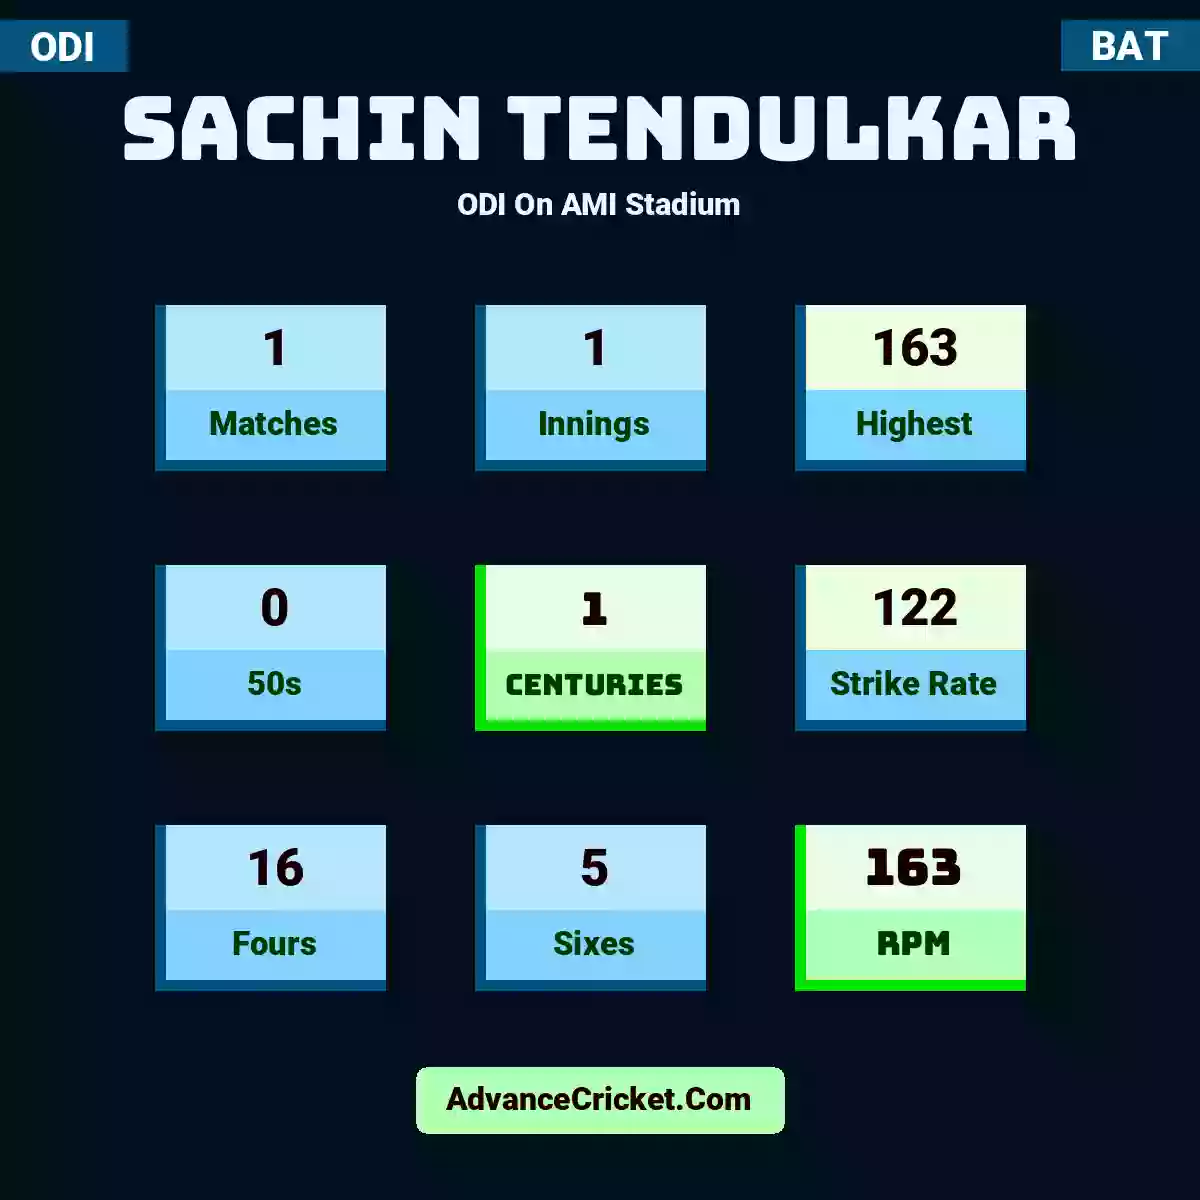 Sachin Tendulkar ODI  On AMI Stadium, Sachin Tendulkar played 1 matches, scored 163 runs as highest, 0 half-centuries, and 1 centuries, with a strike rate of 122. S.Tendulkar hit 16 fours and 5 sixes, with an RPM of 163.